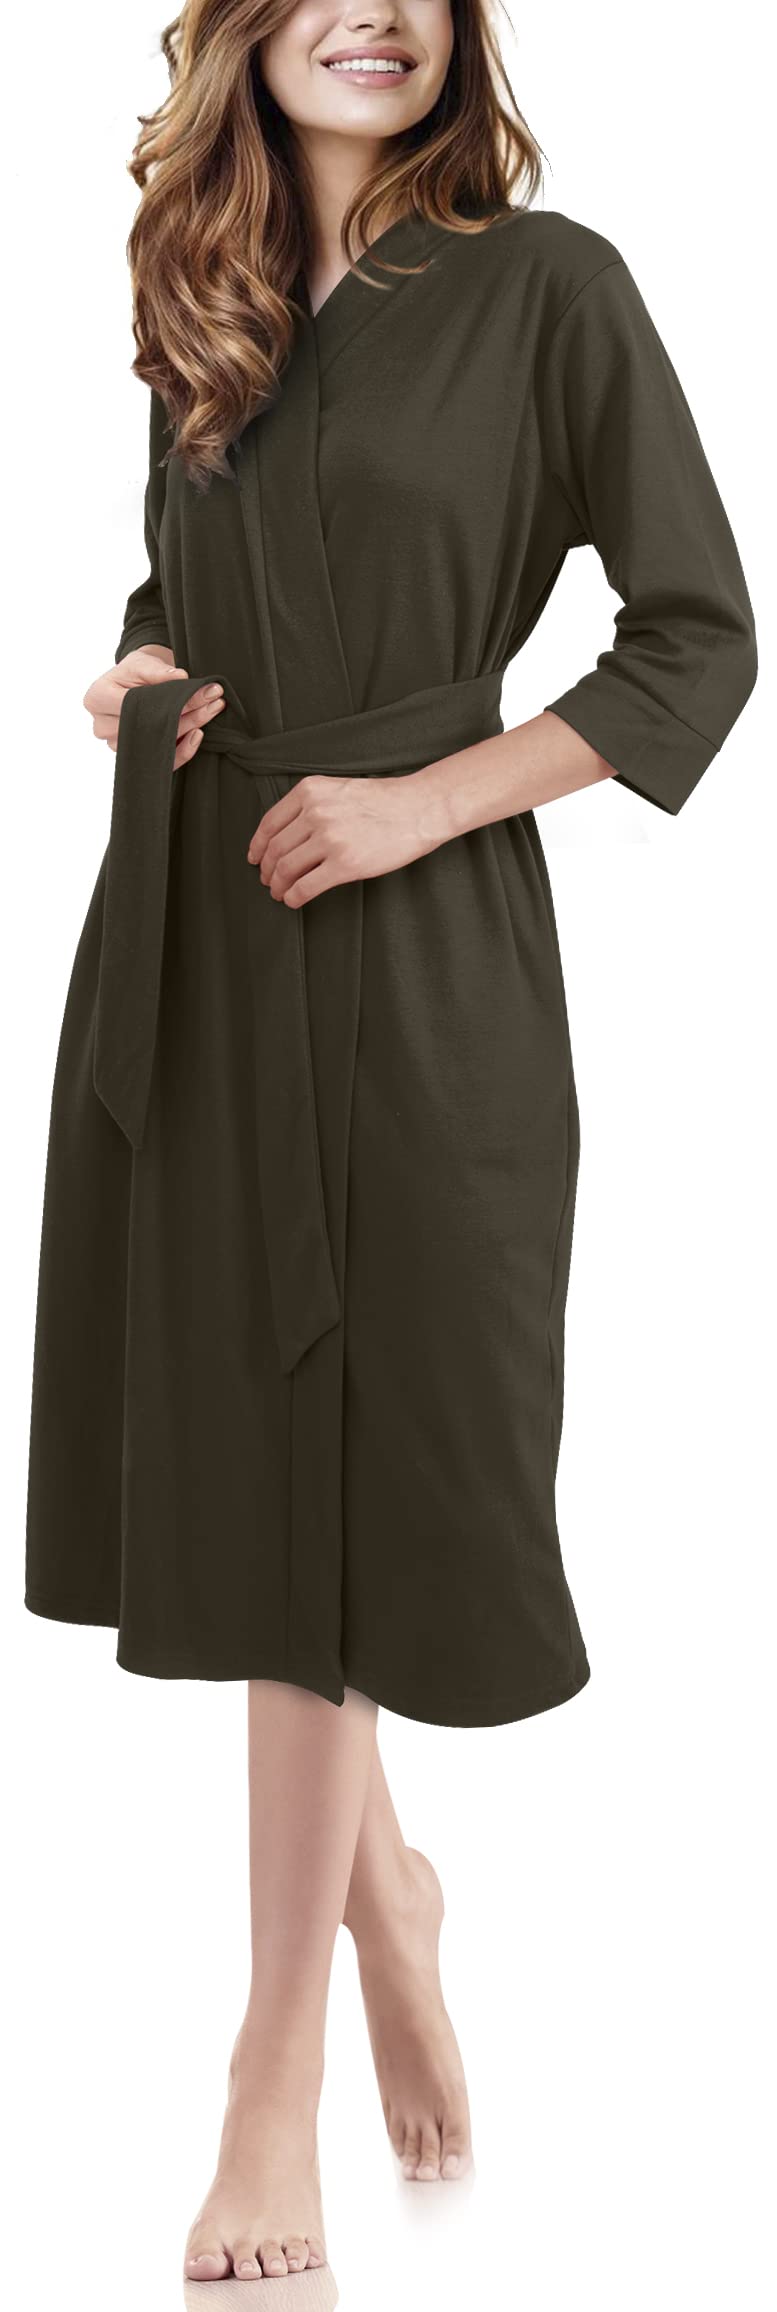 NY Threads Luxurious Women Knit Robe Kimono cotton Blend Bathrobe Ladies Loungewear Sleepwear (X-Large, Olive green)